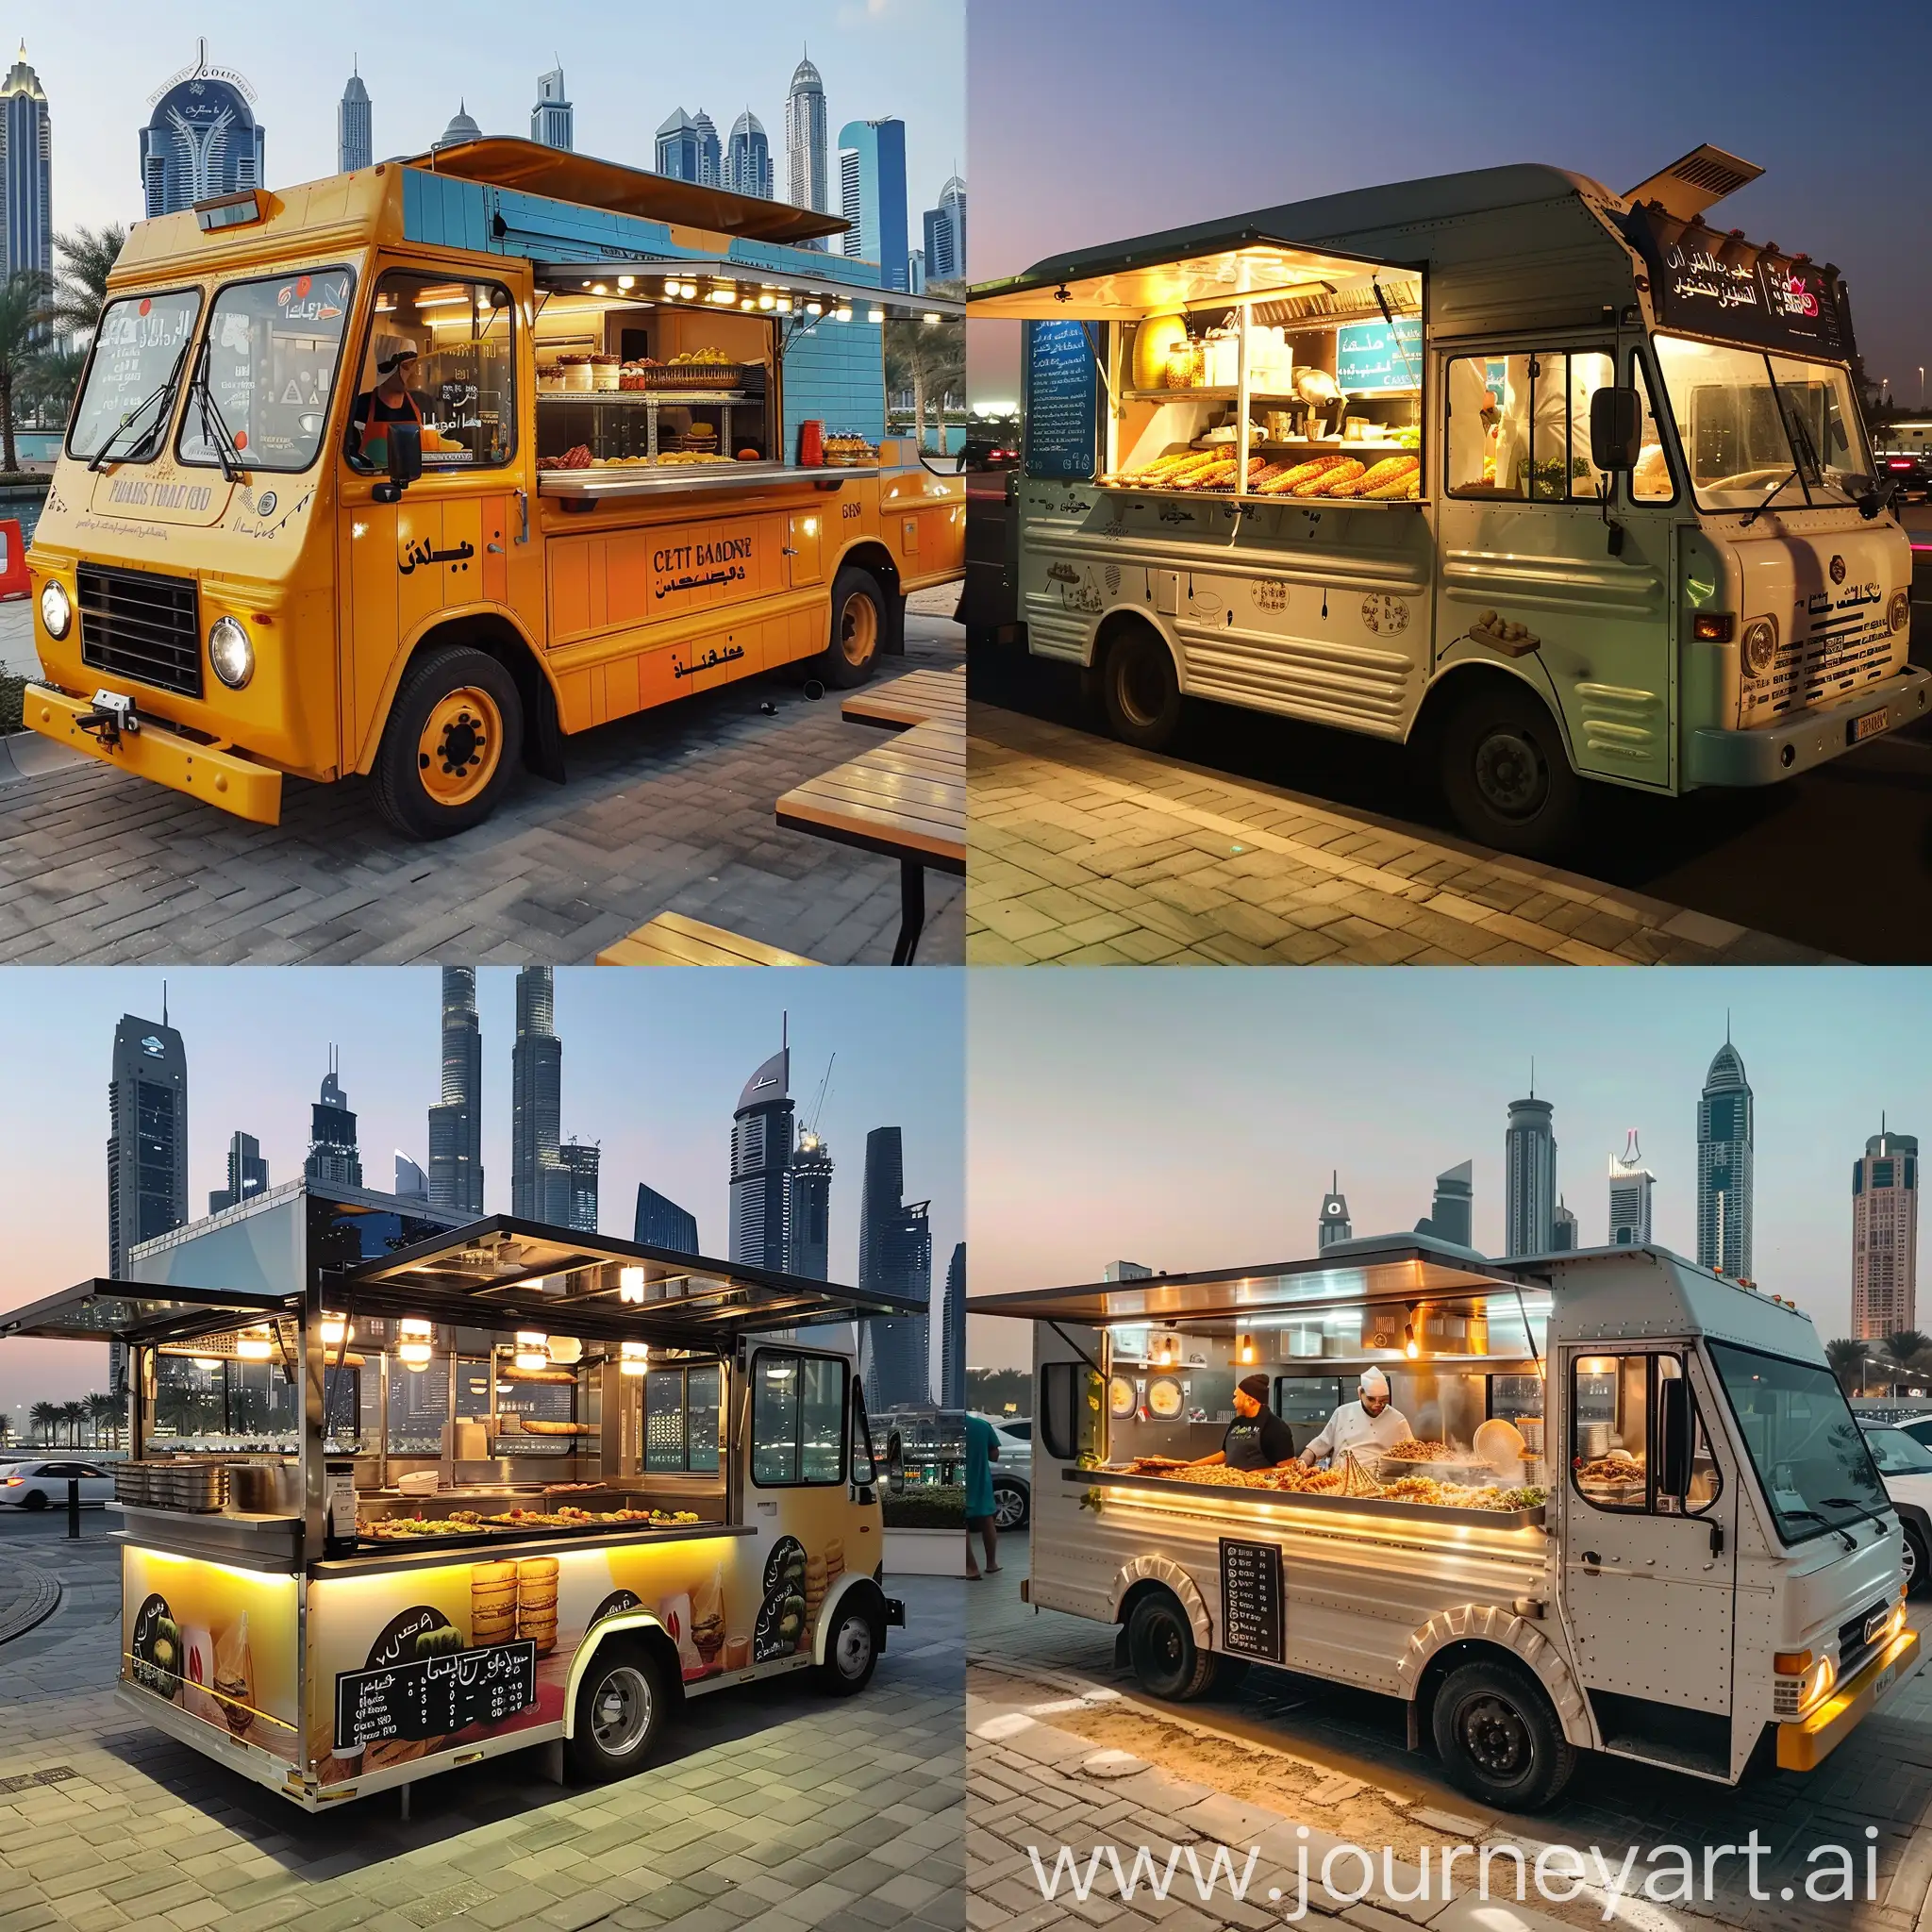 Dubai-Food-Truck-Vibrant-Street-Cuisine-in-the-Heart-of-the-City